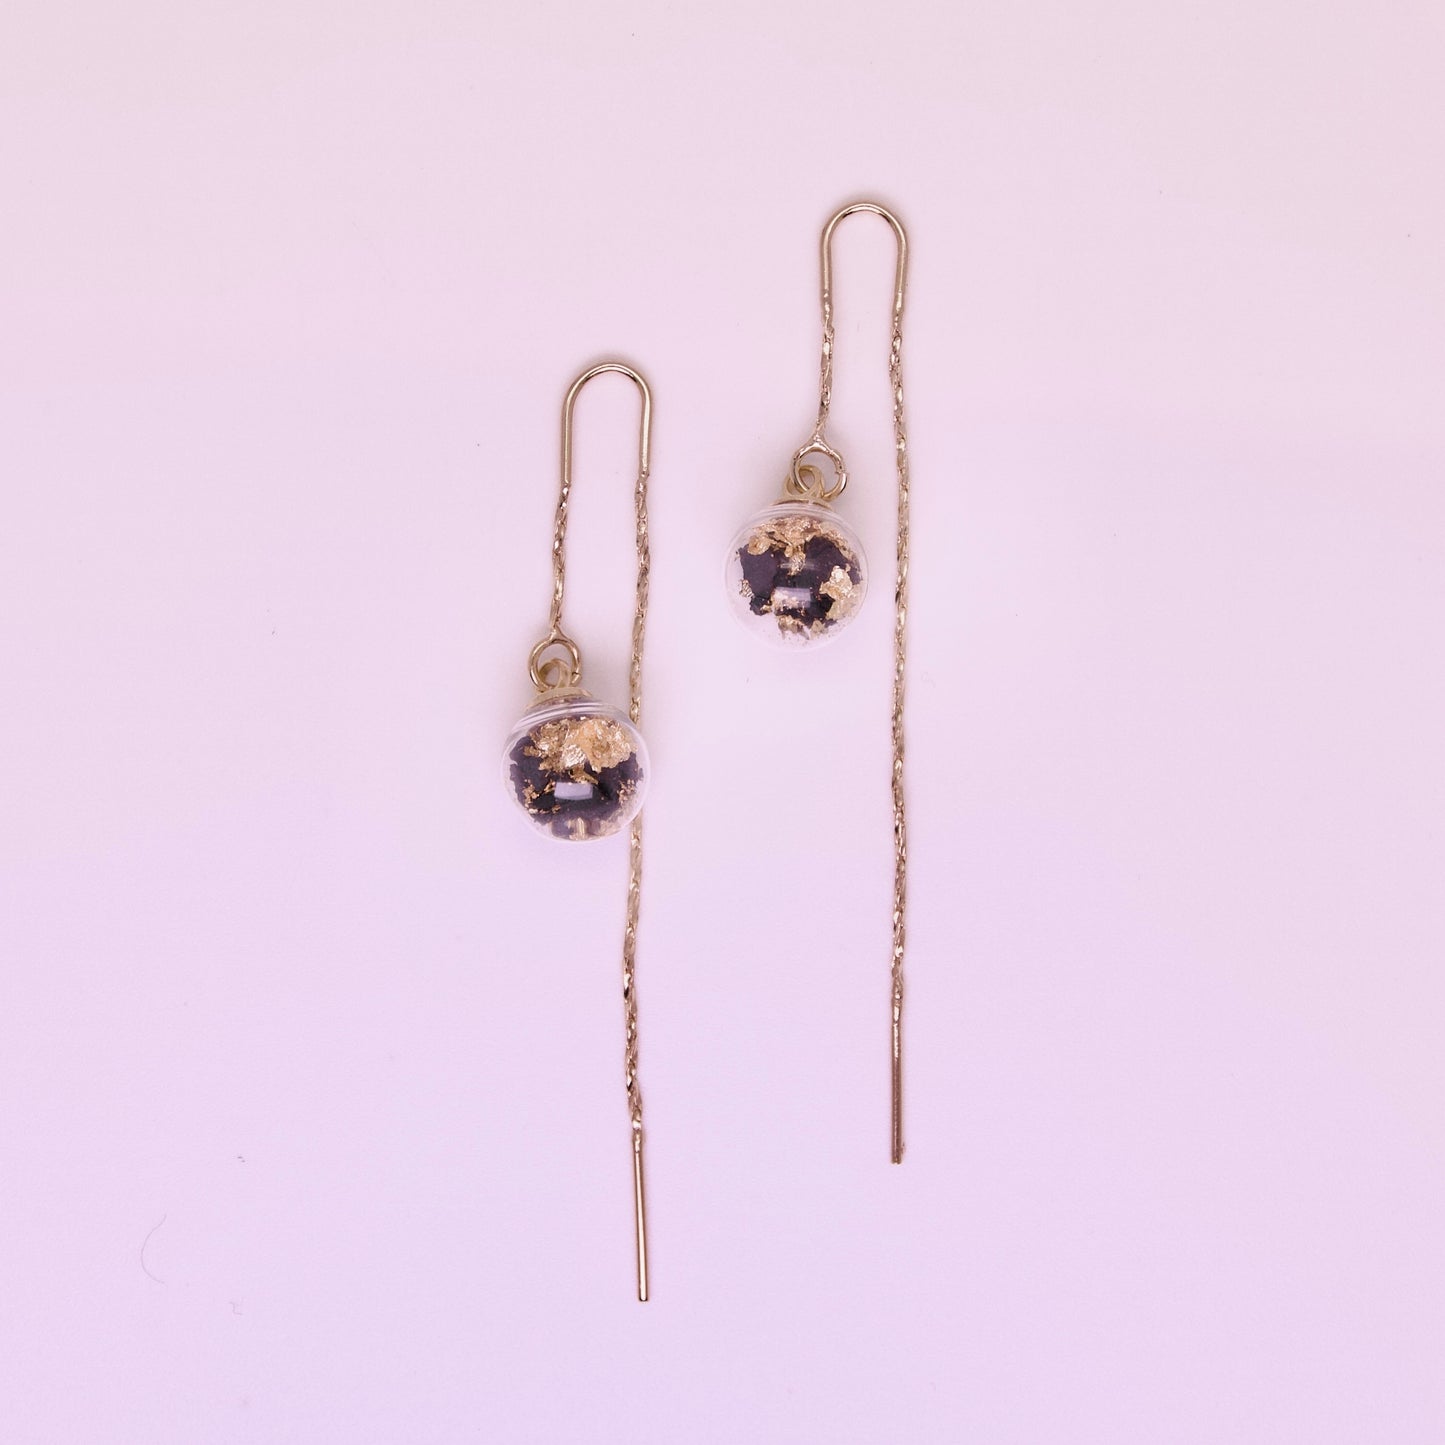 Concrete Dangling Glass Sphere Earrings - Type I - Black